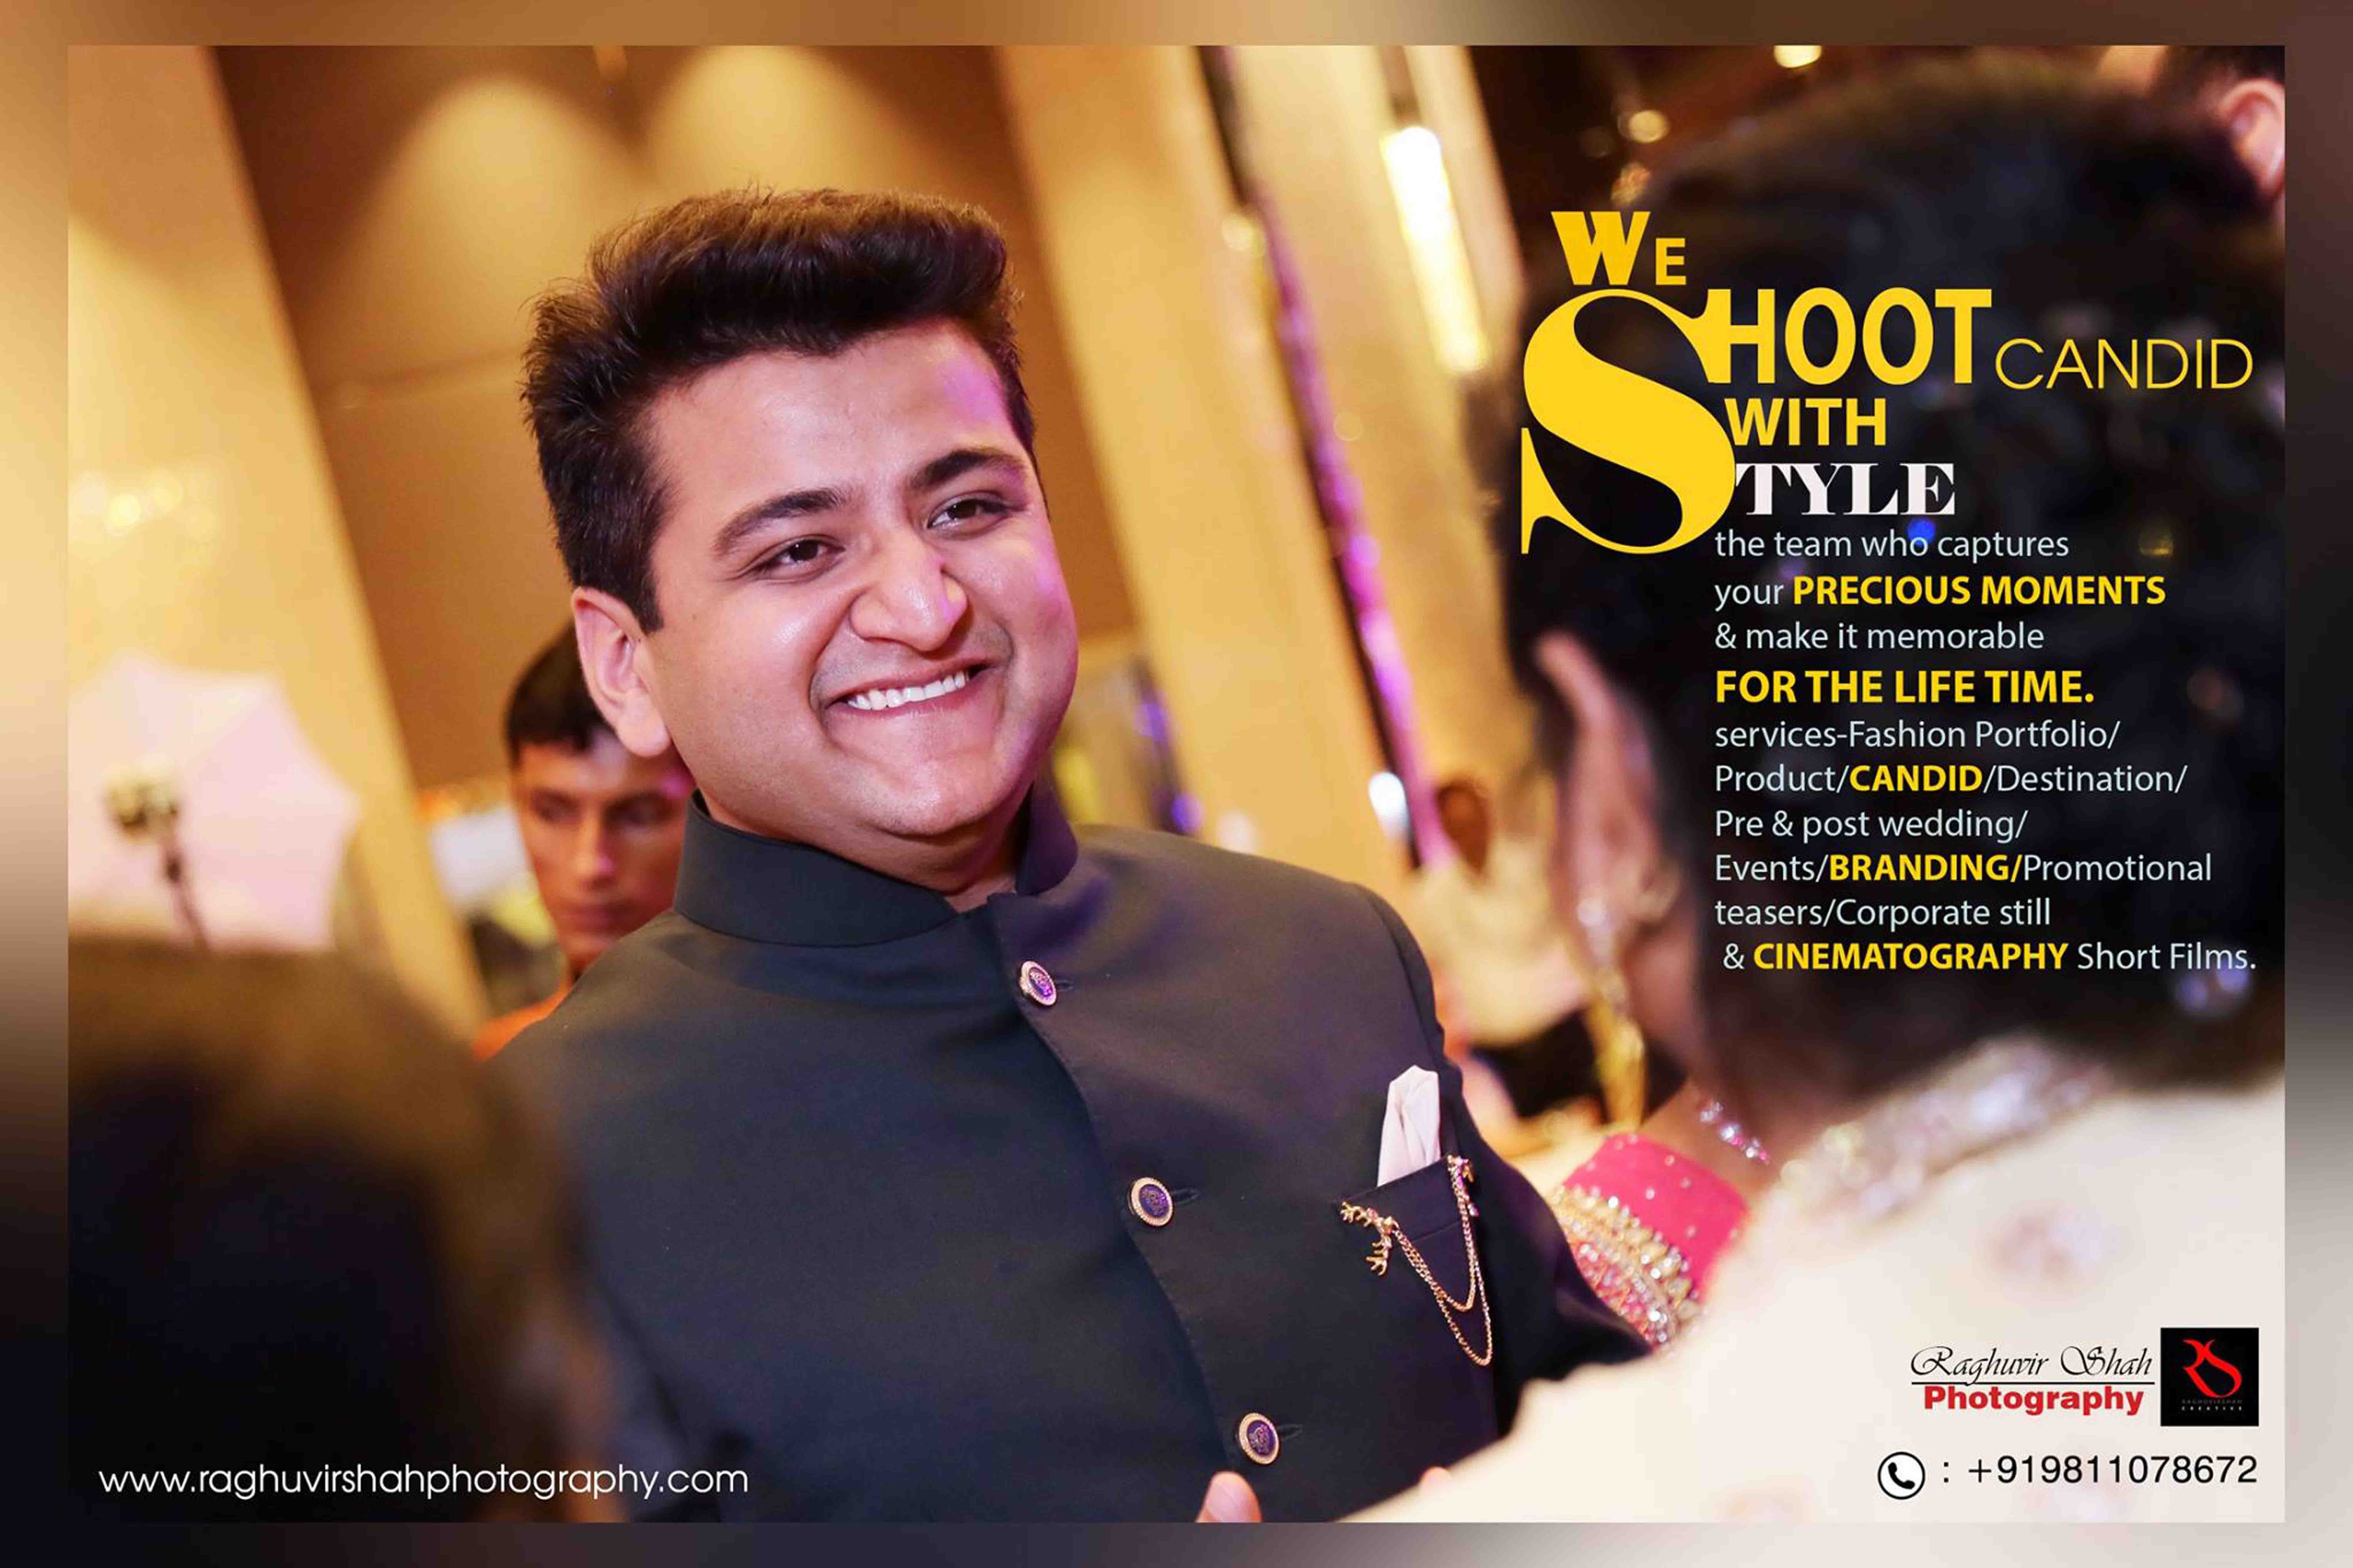 Wedding photographer in delhiEntertainmentPhotographers - CameramanWest DelhiPitampura